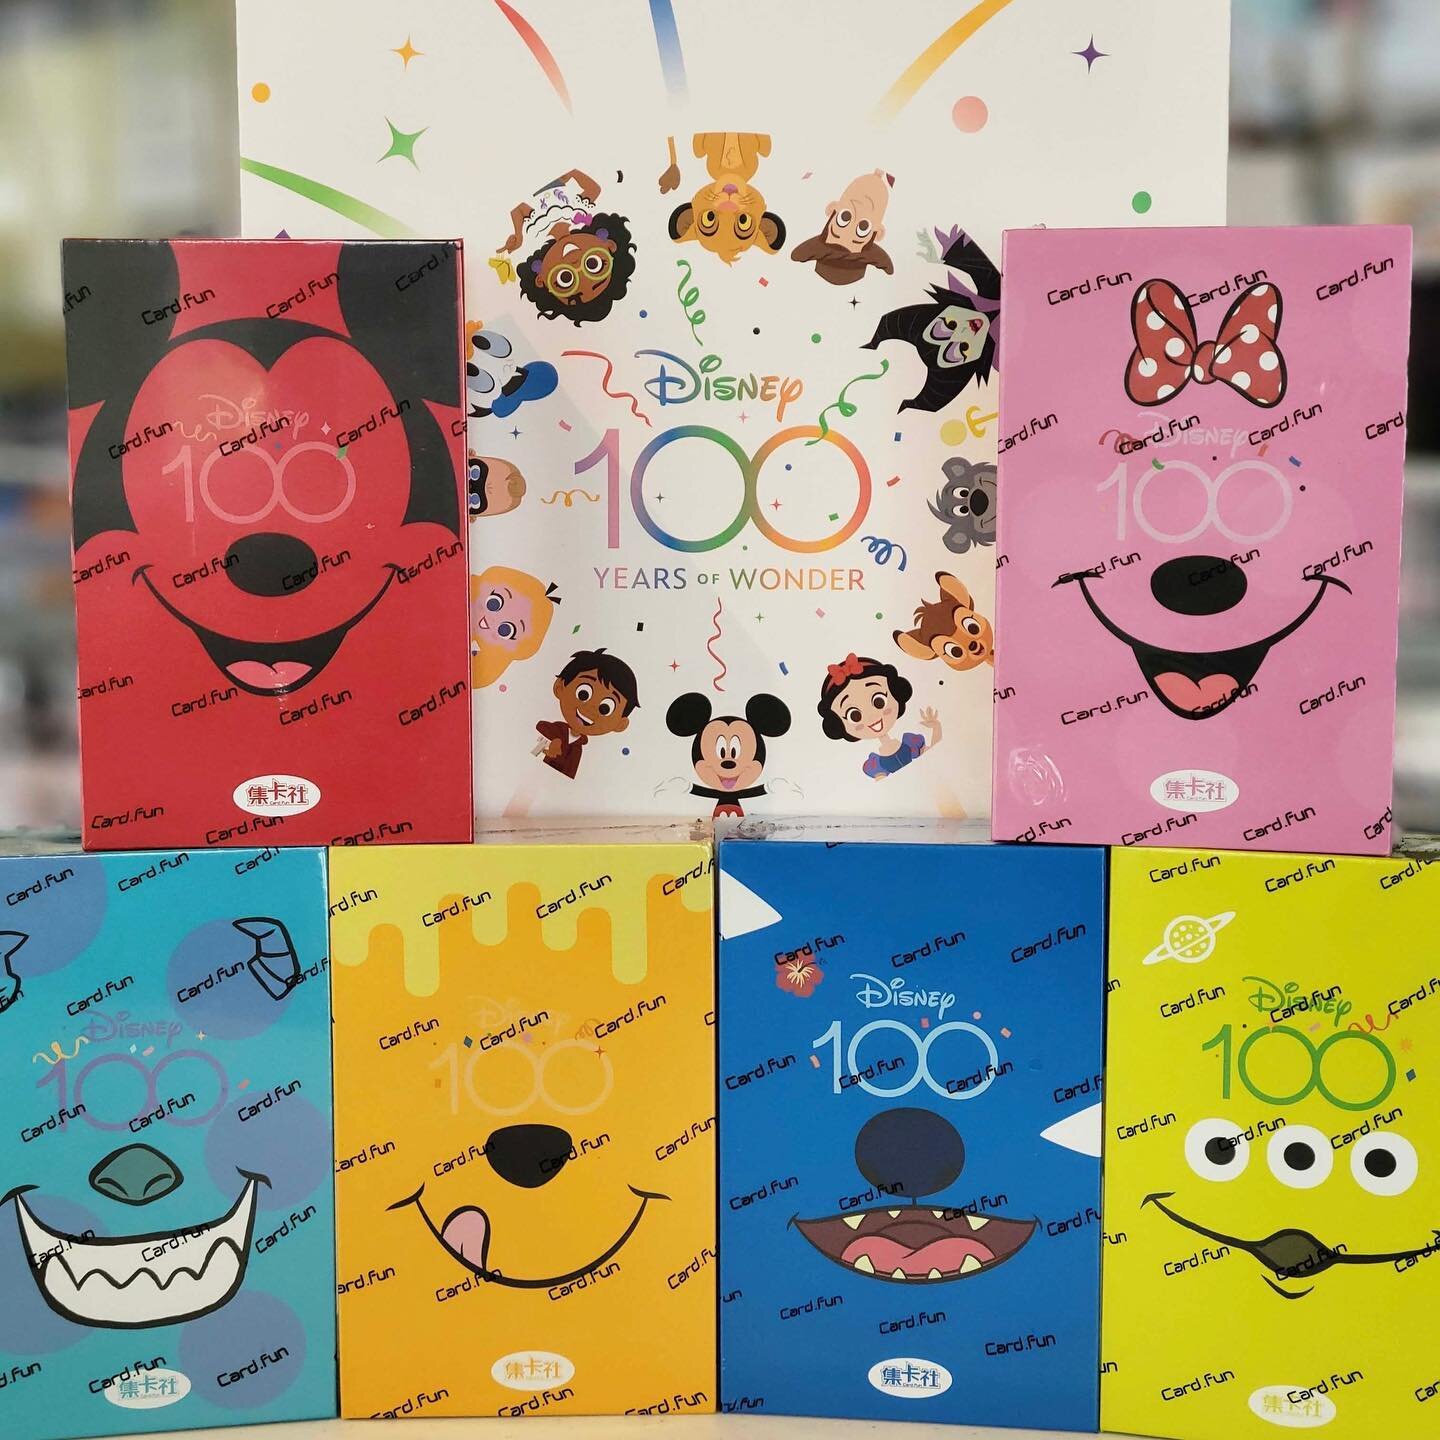 Now Available: Disney 100 Joyful Trading Cards Hobby Box!

Limited Supply

#disney100 #disney #pixar #zootopia #brave #lionking #cars #soul #moana #toystory #starwars #frozen #thegooddinosaur #lilostitch #encanto #mickey #minnie #sullivan #stitch #pl